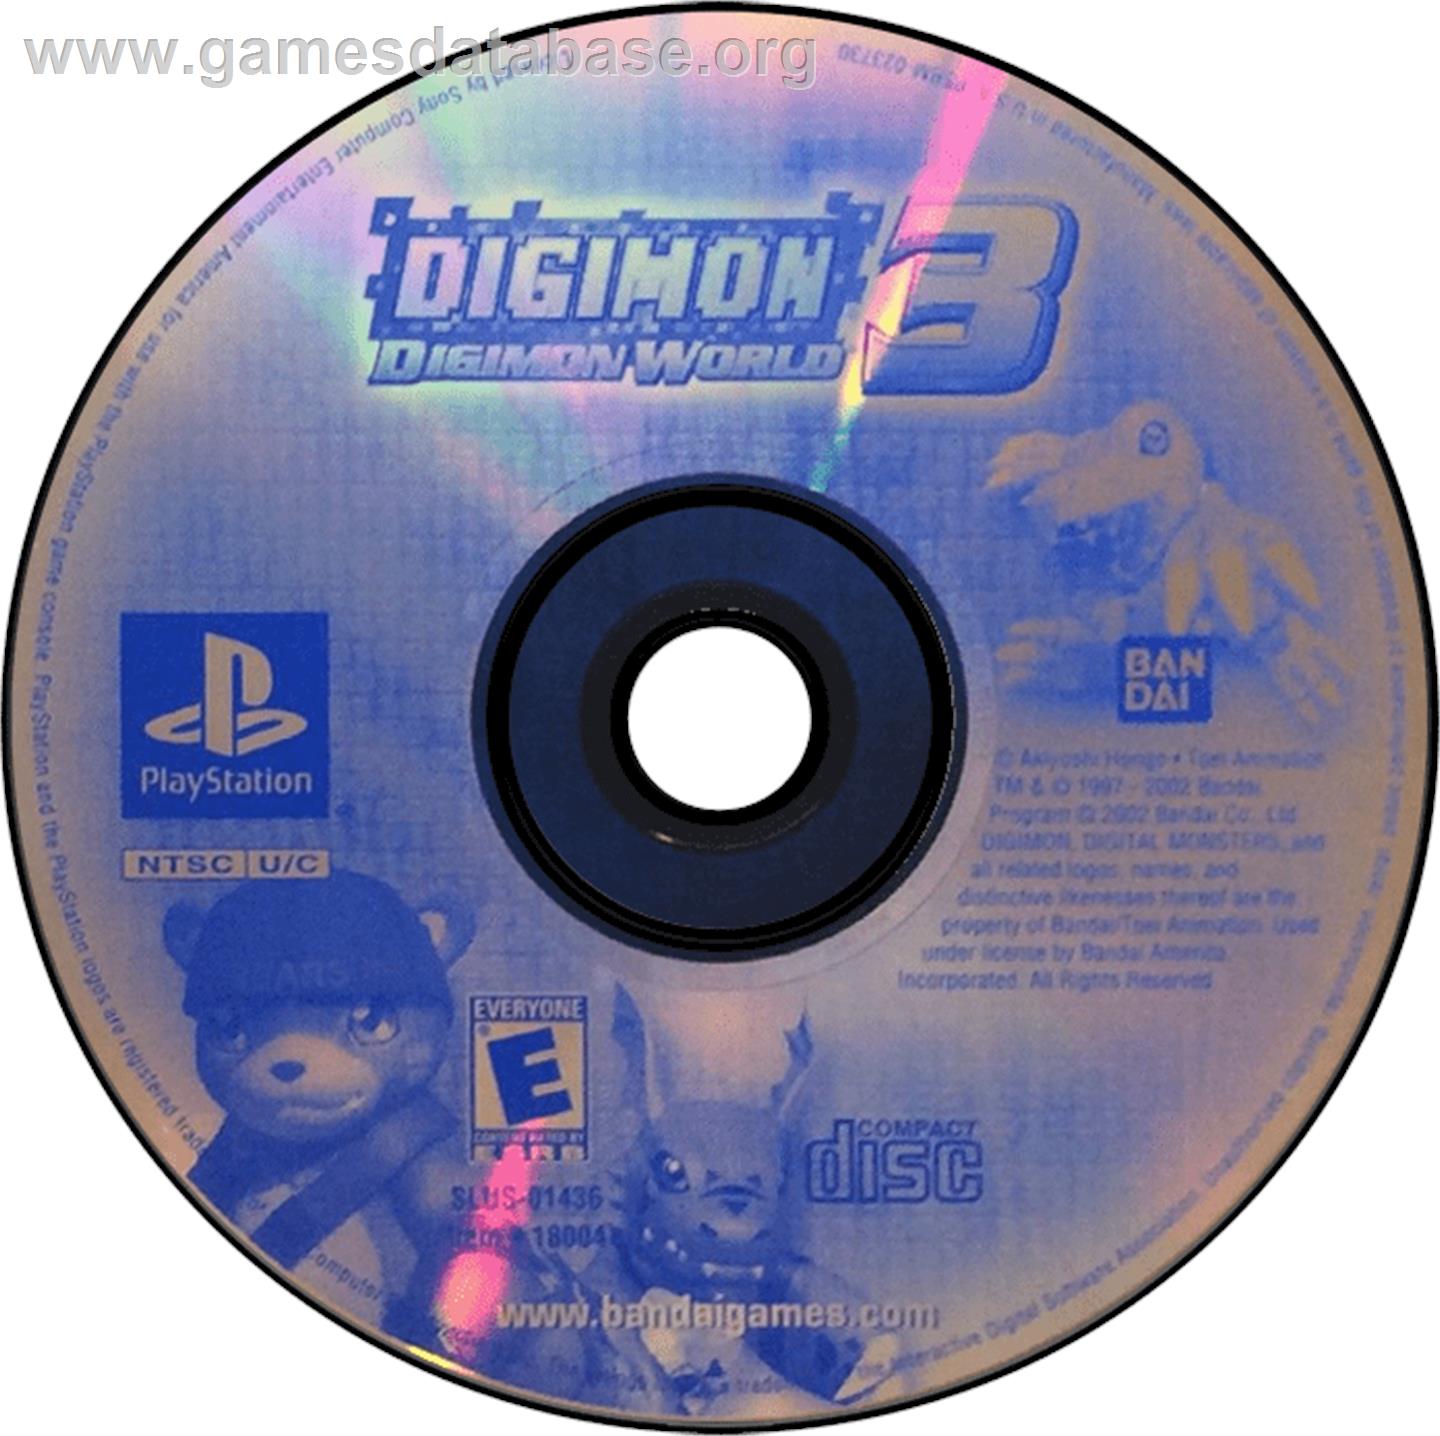 Digimon World 3 - Sony Playstation - Artwork - Disc